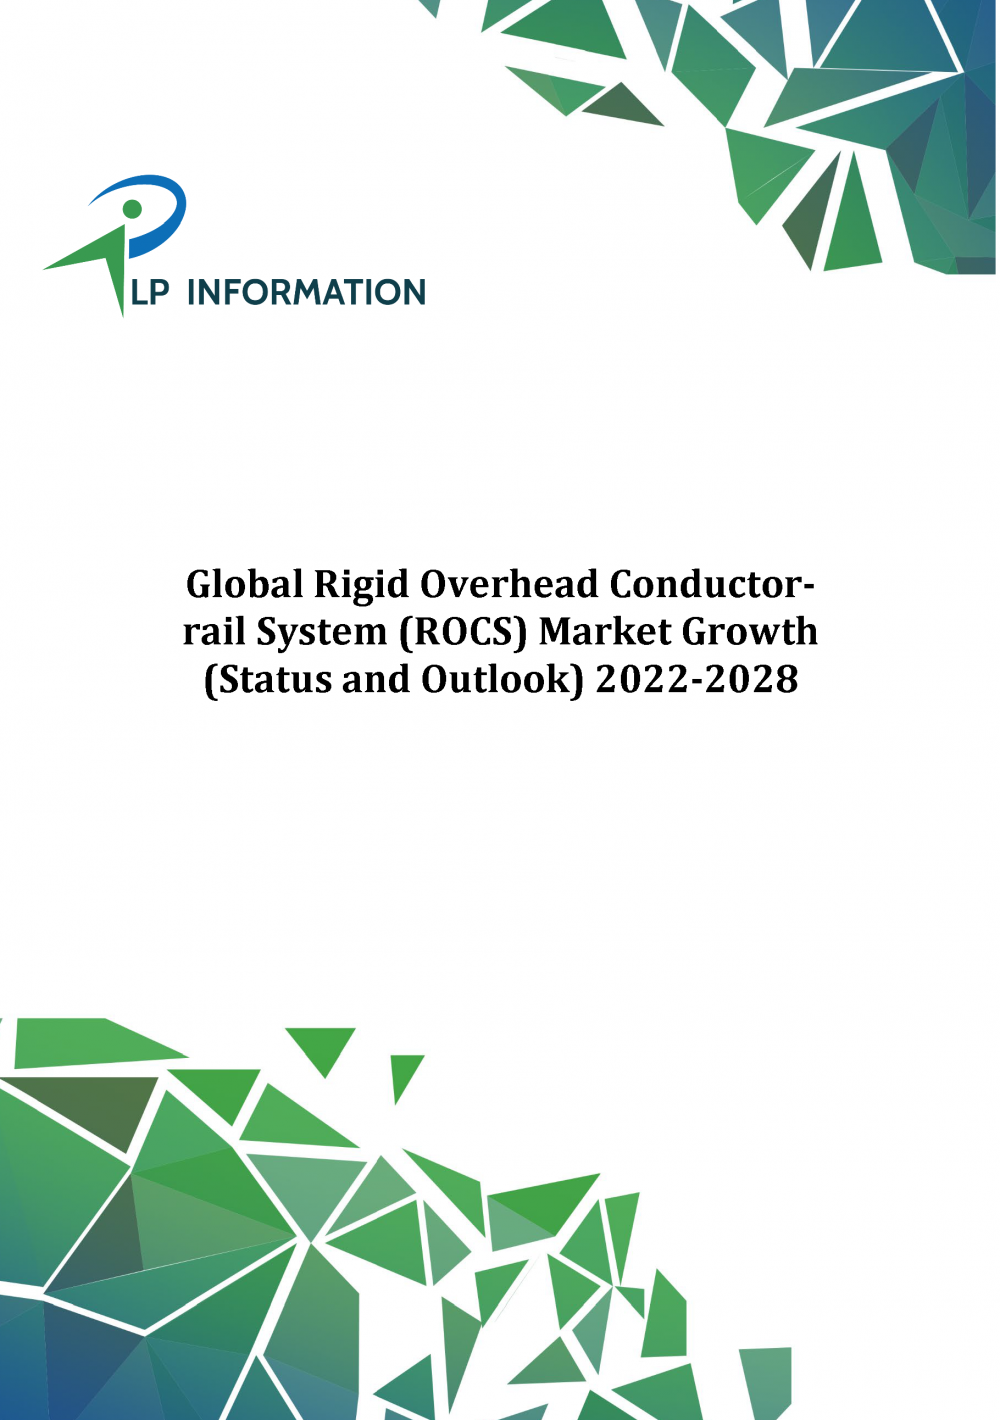 Global Rigid Overhead Conductor-rail System Market Growth 2022-2028